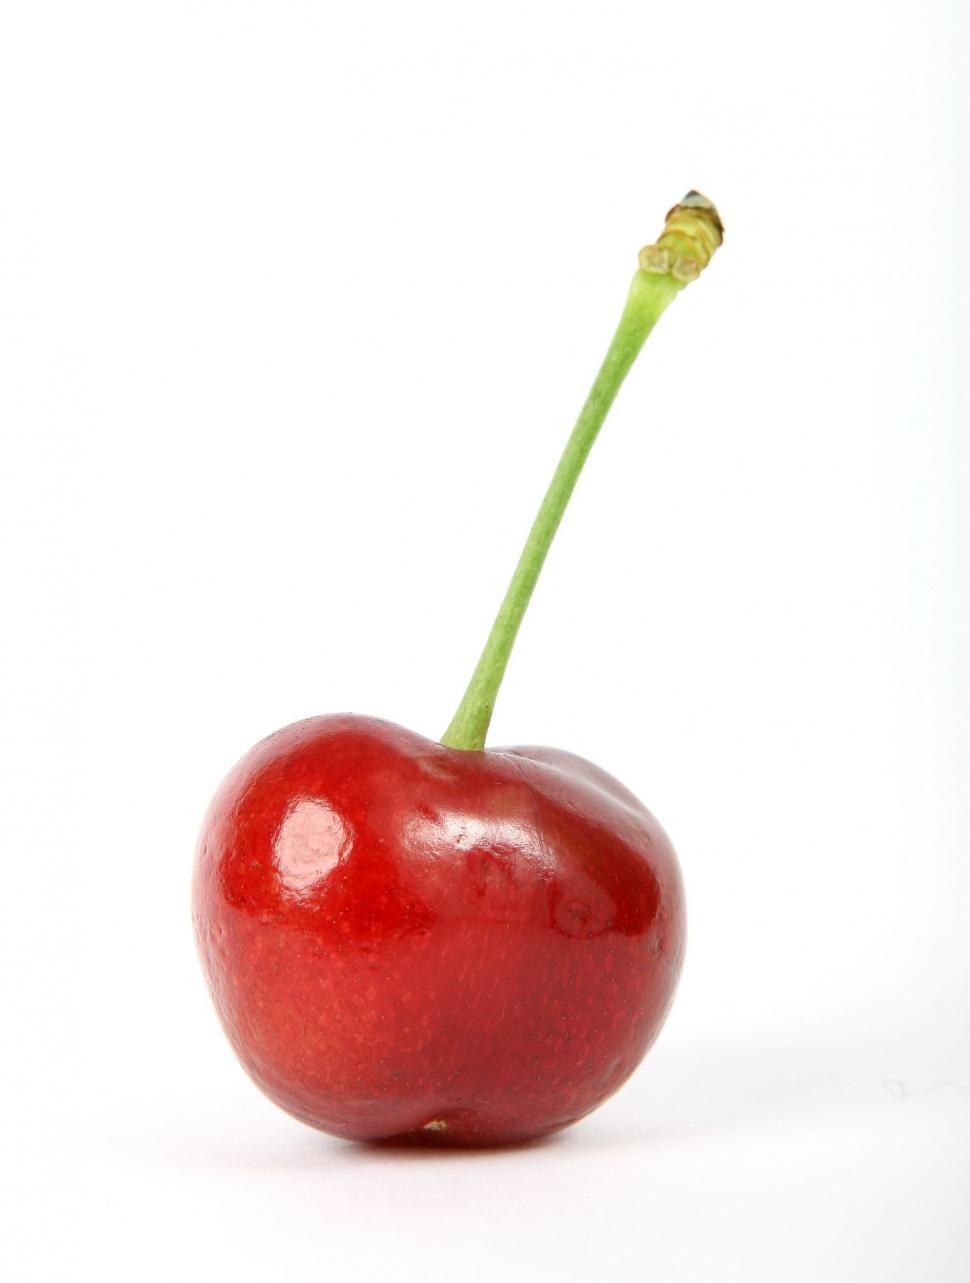 Free Image of Single Cherry on White Surface 